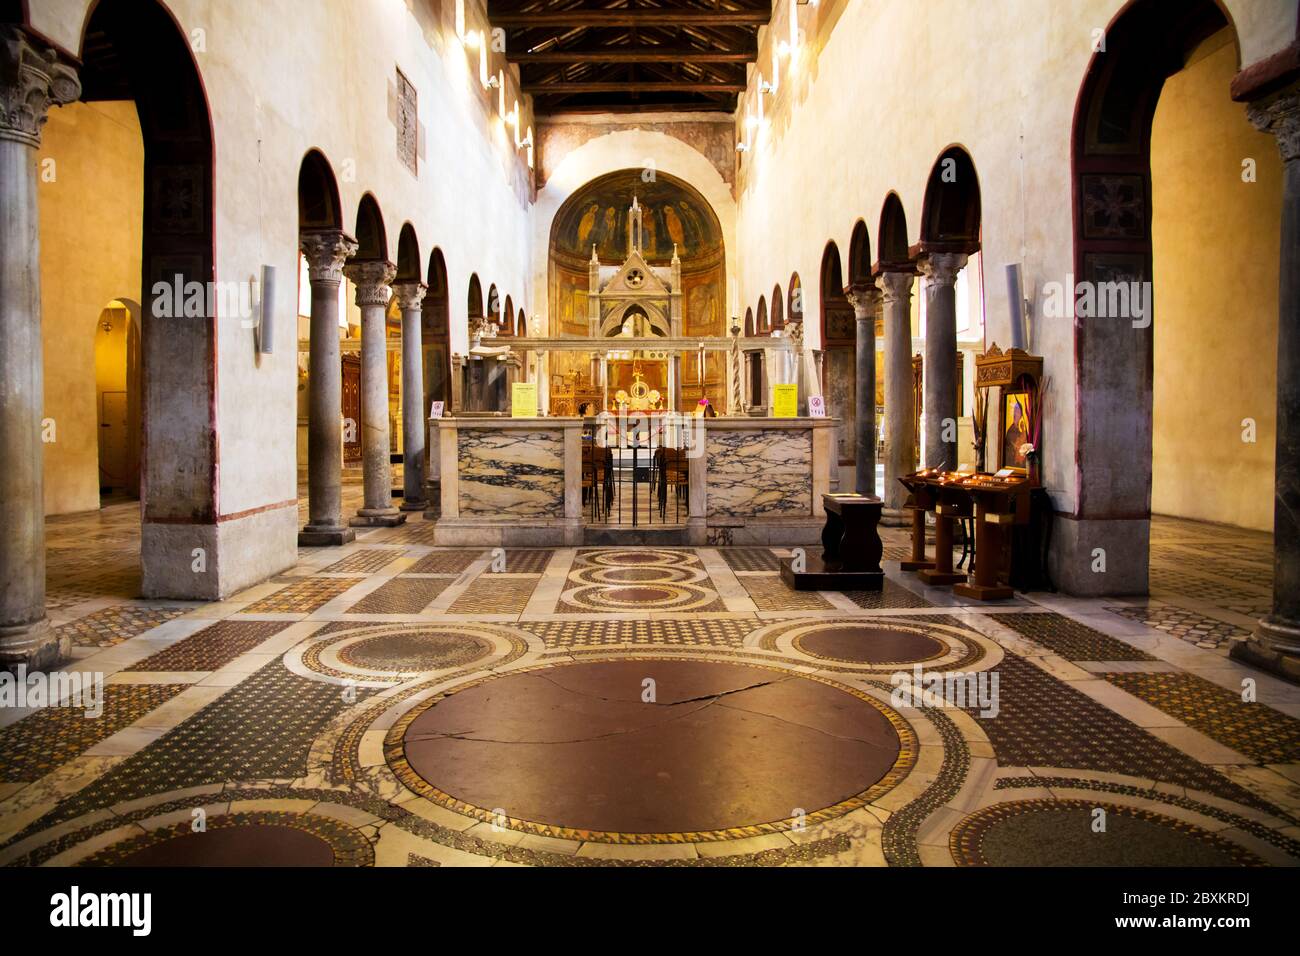 Interior of Basilica Santa Maria in Cosmedin in Rome Italy Stock Photo